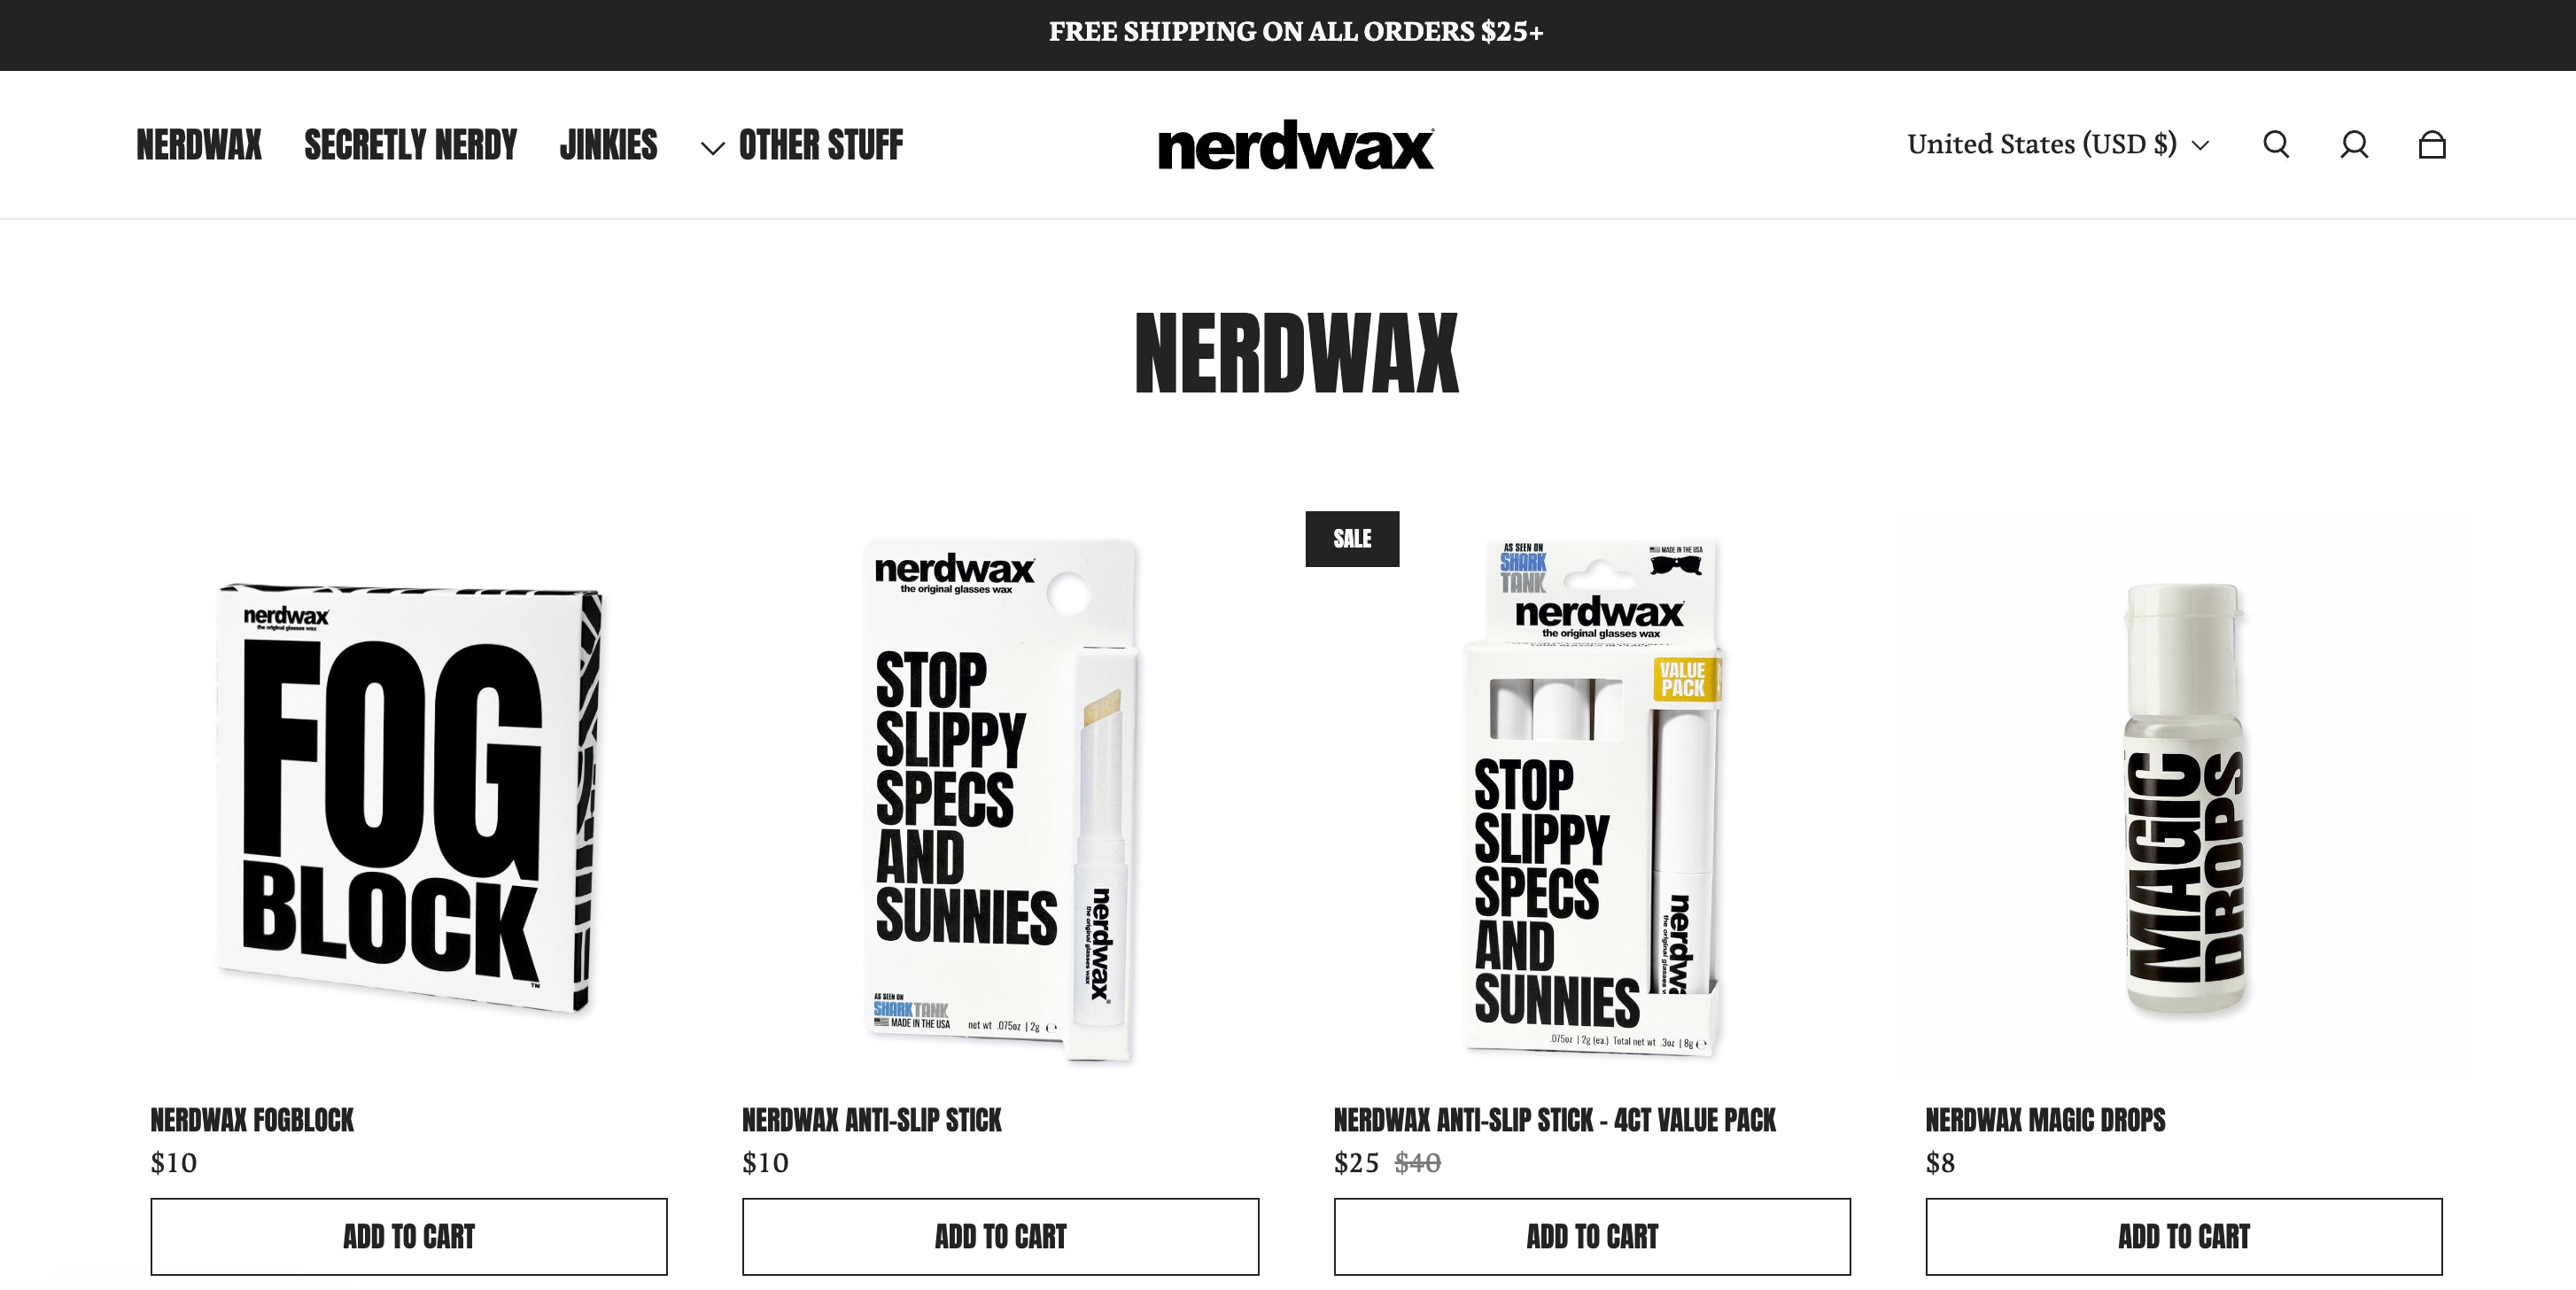 Nerdwax - Crunchbase Company Profile & Funding